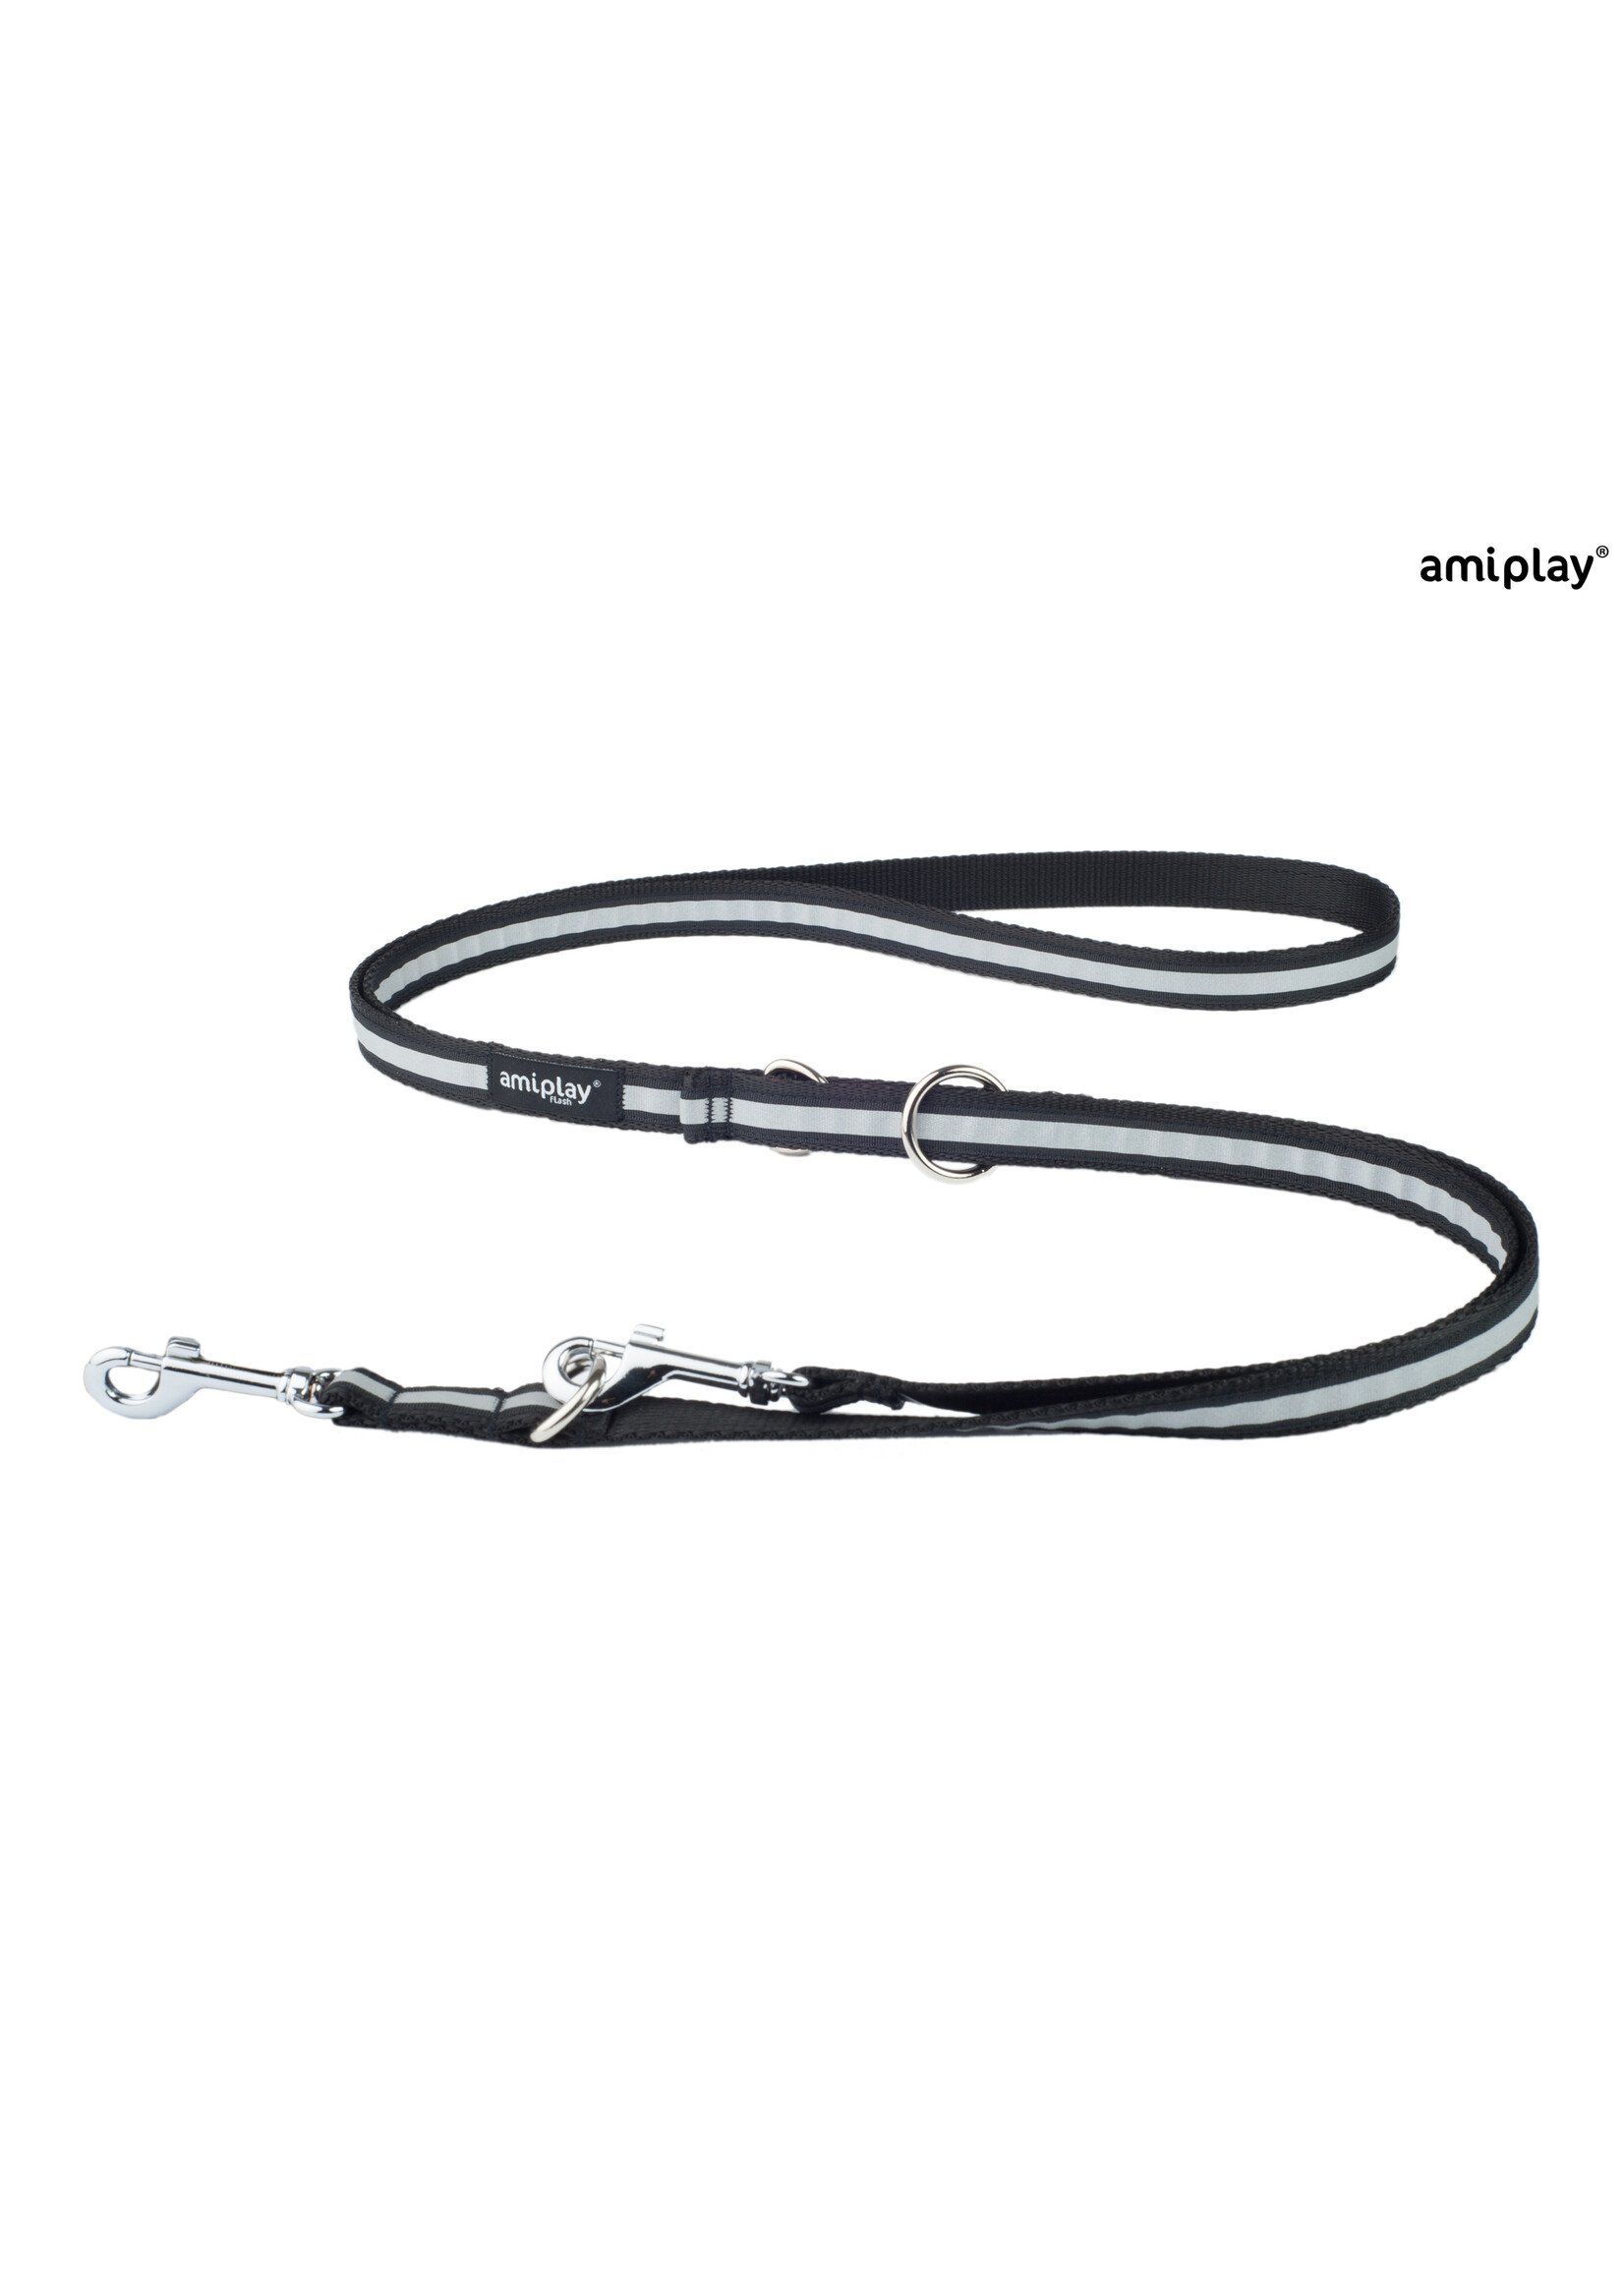 Amiplay Leiband verstelbaar 6in1 Shine zwart maat-L / 100-200x2cm